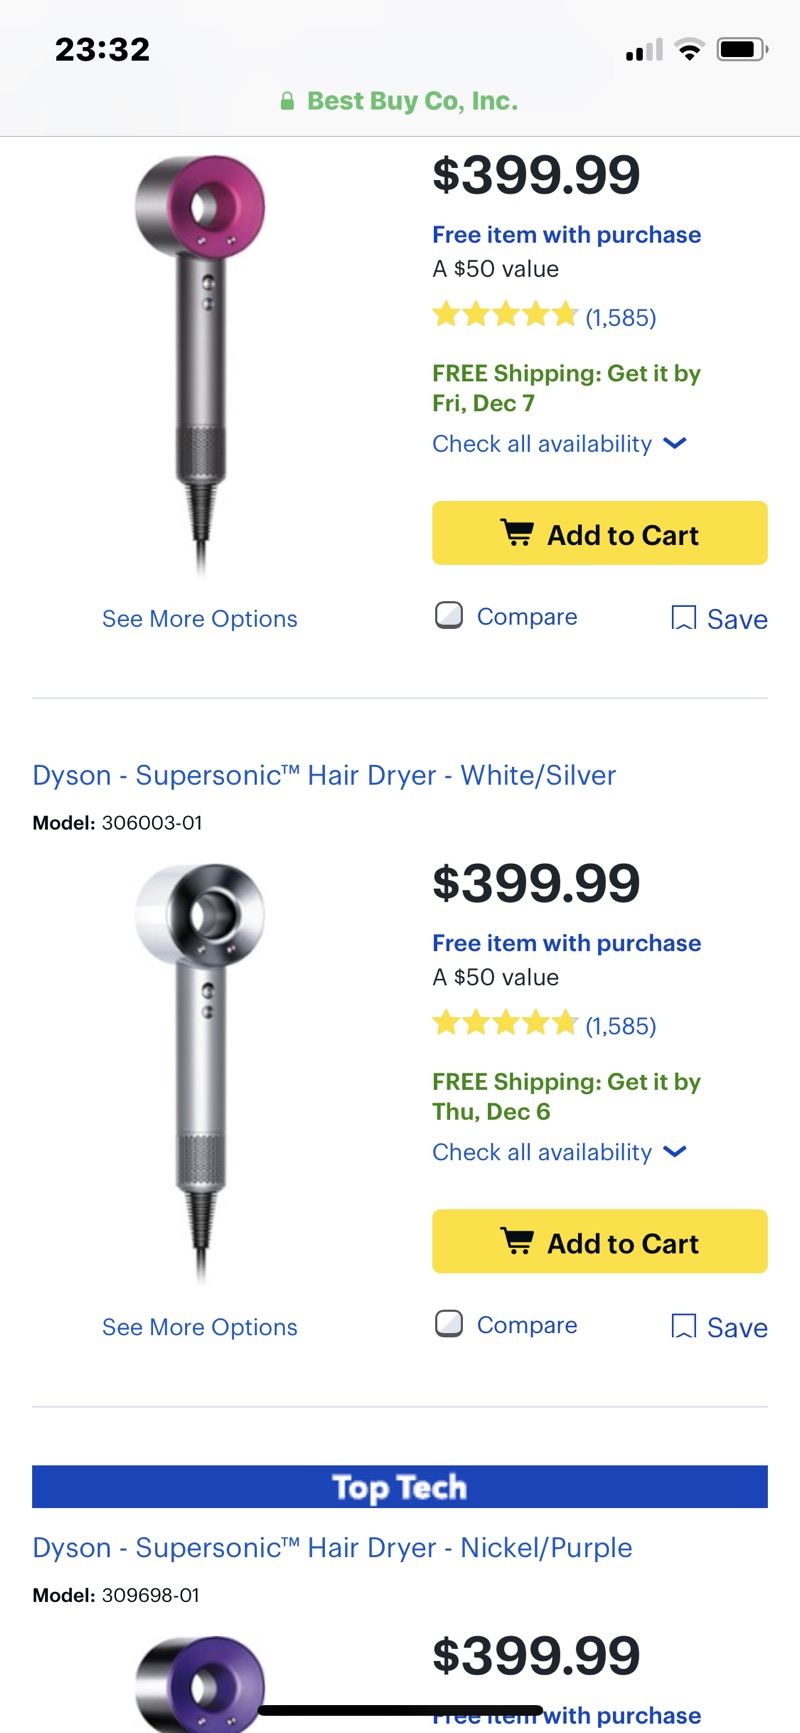 Dyson吹风机送$50礼卡
三色可选 更有礼包装
dyson-supersonic-gift-card-savings - Best Buy